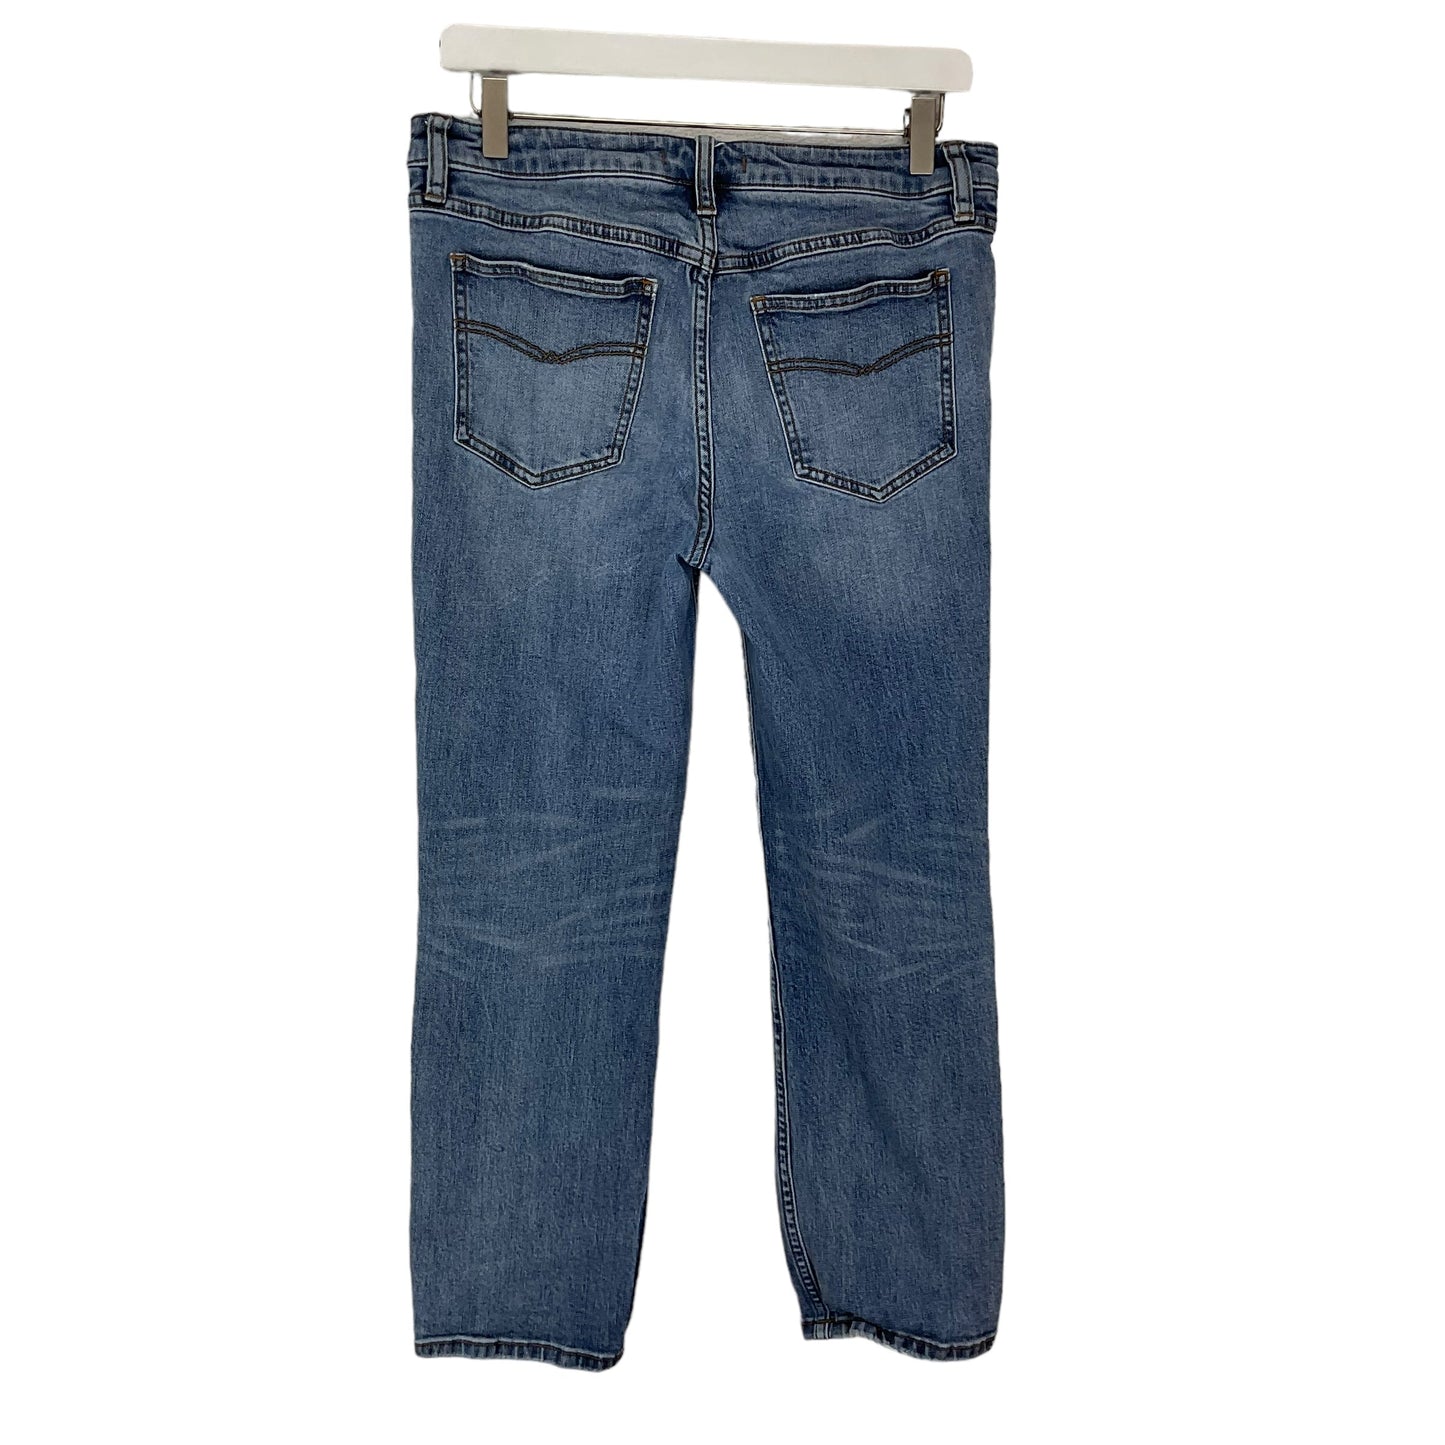 Blue Denim Jeans Straight Free People, Size 29